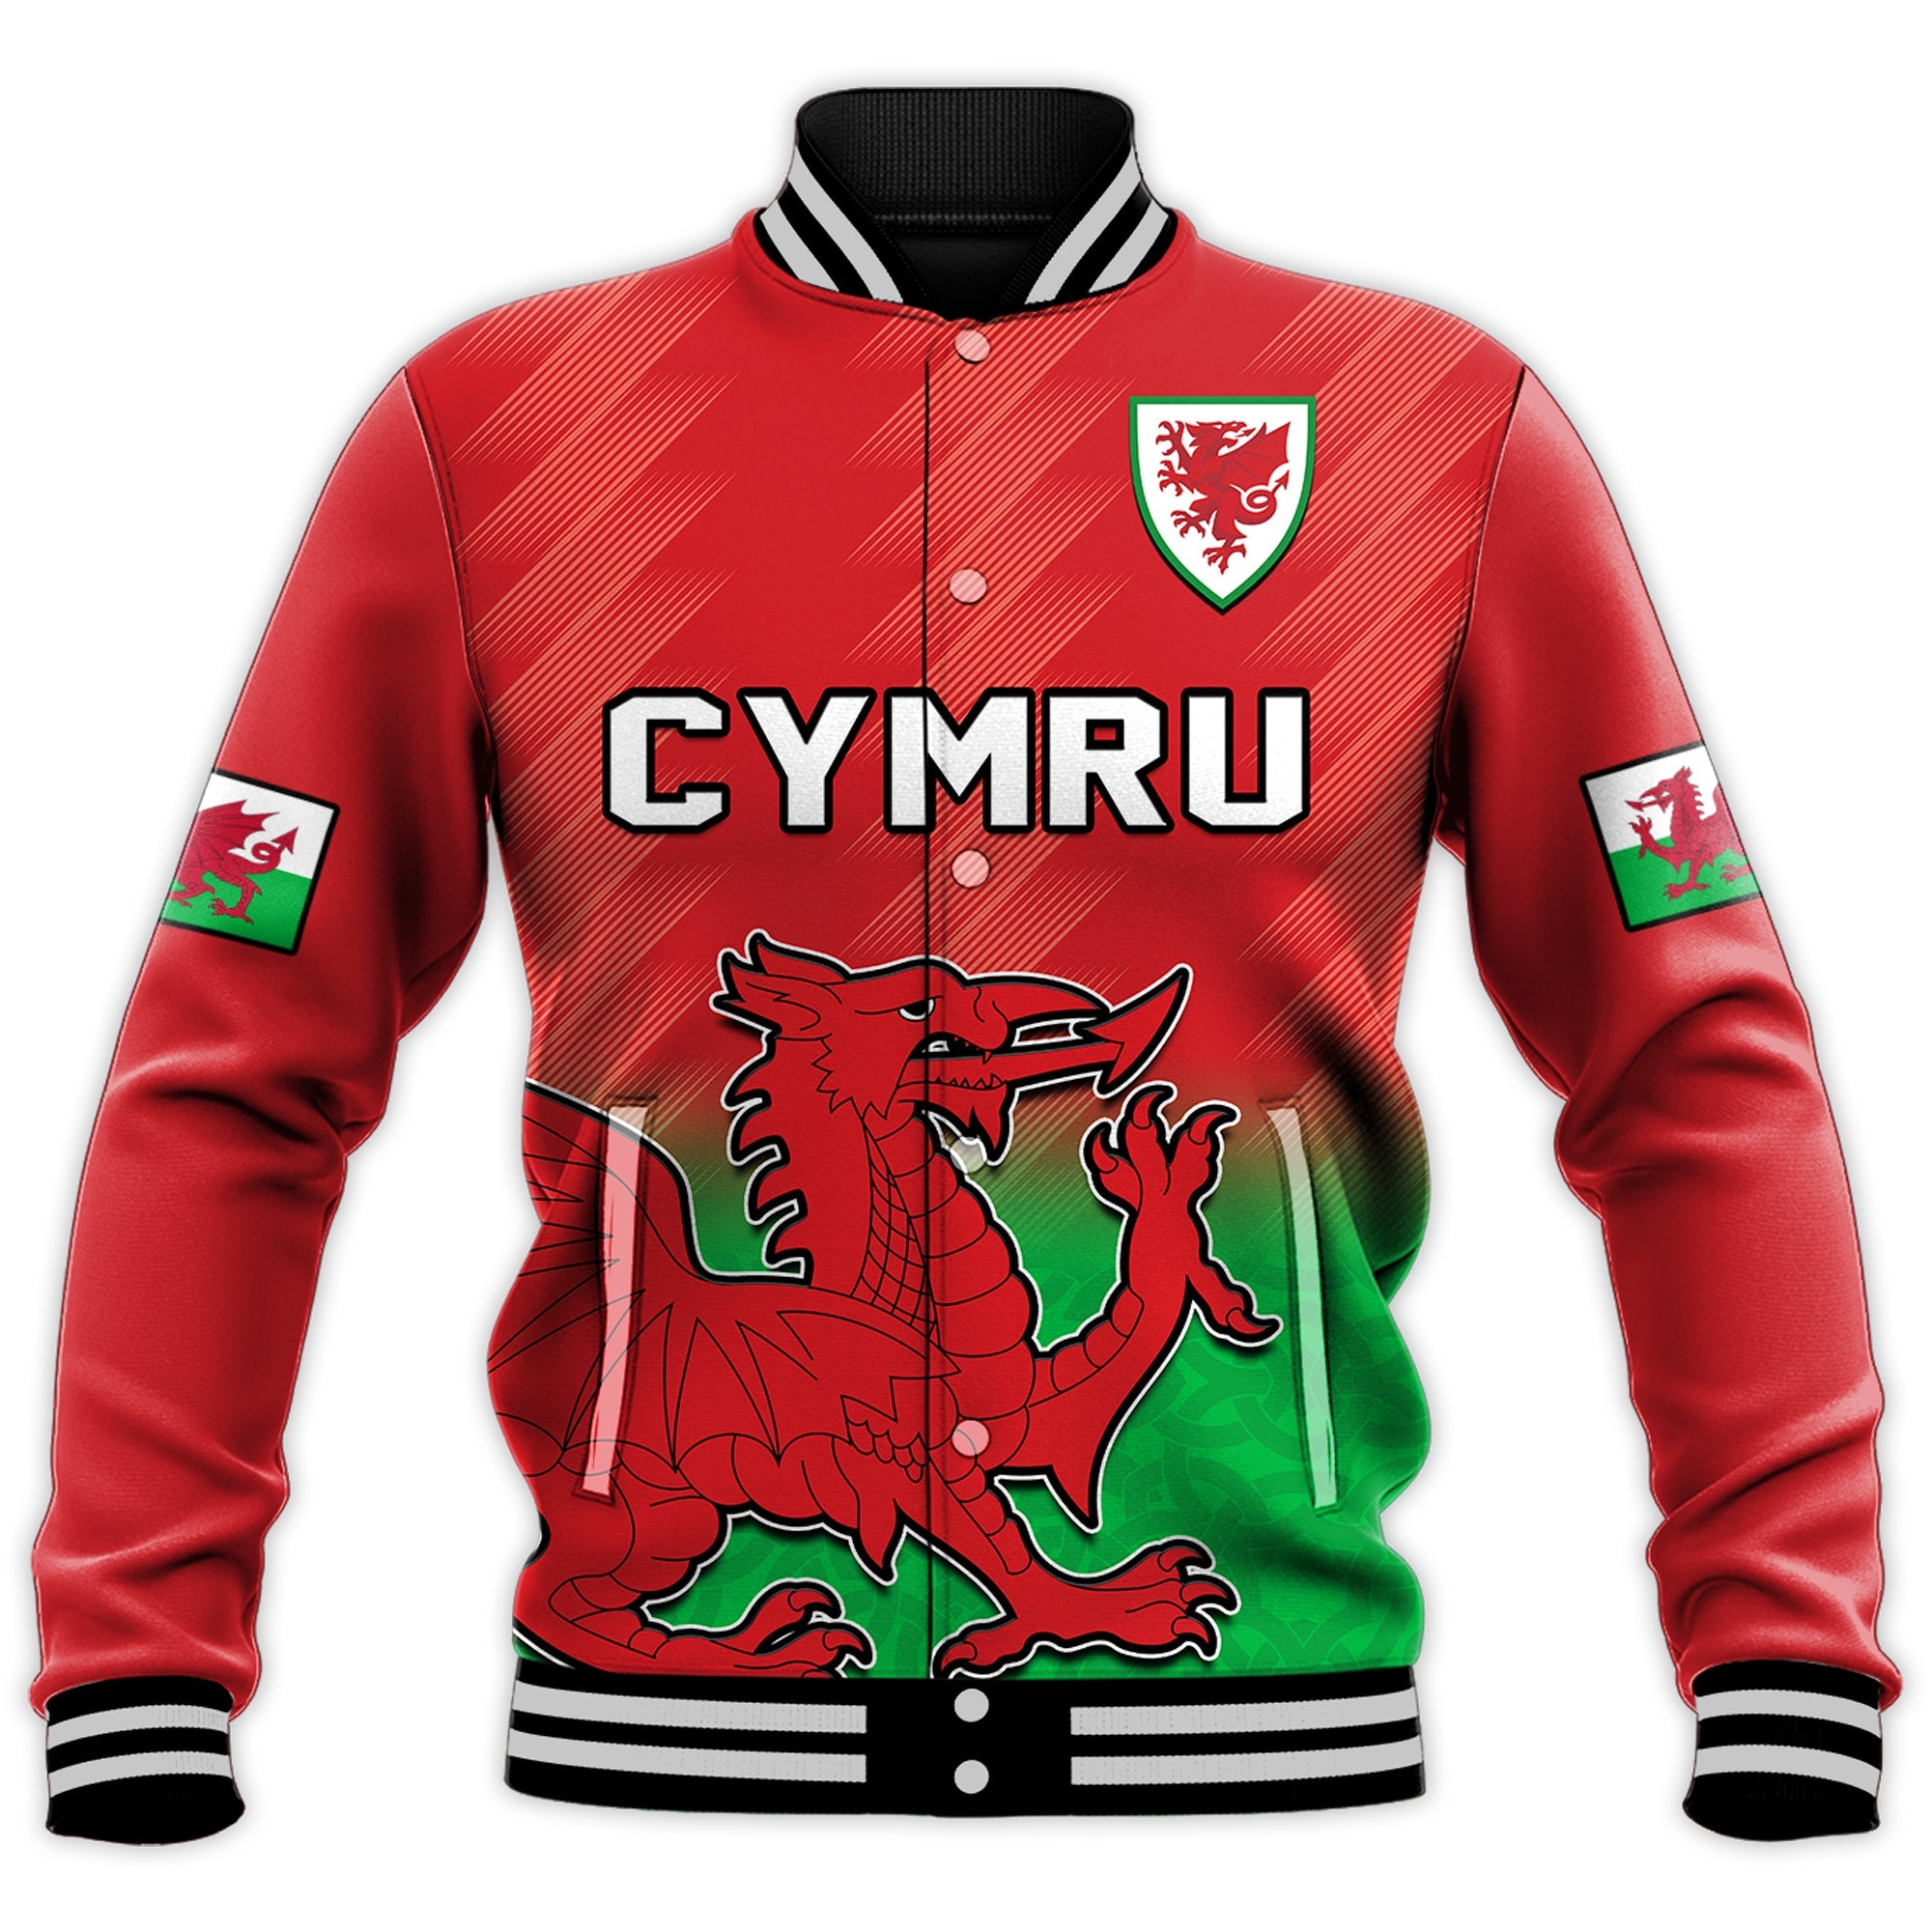 wales-football-baseball-jacket-world-cup-2022-come-on-cymru-yma-o-hyd